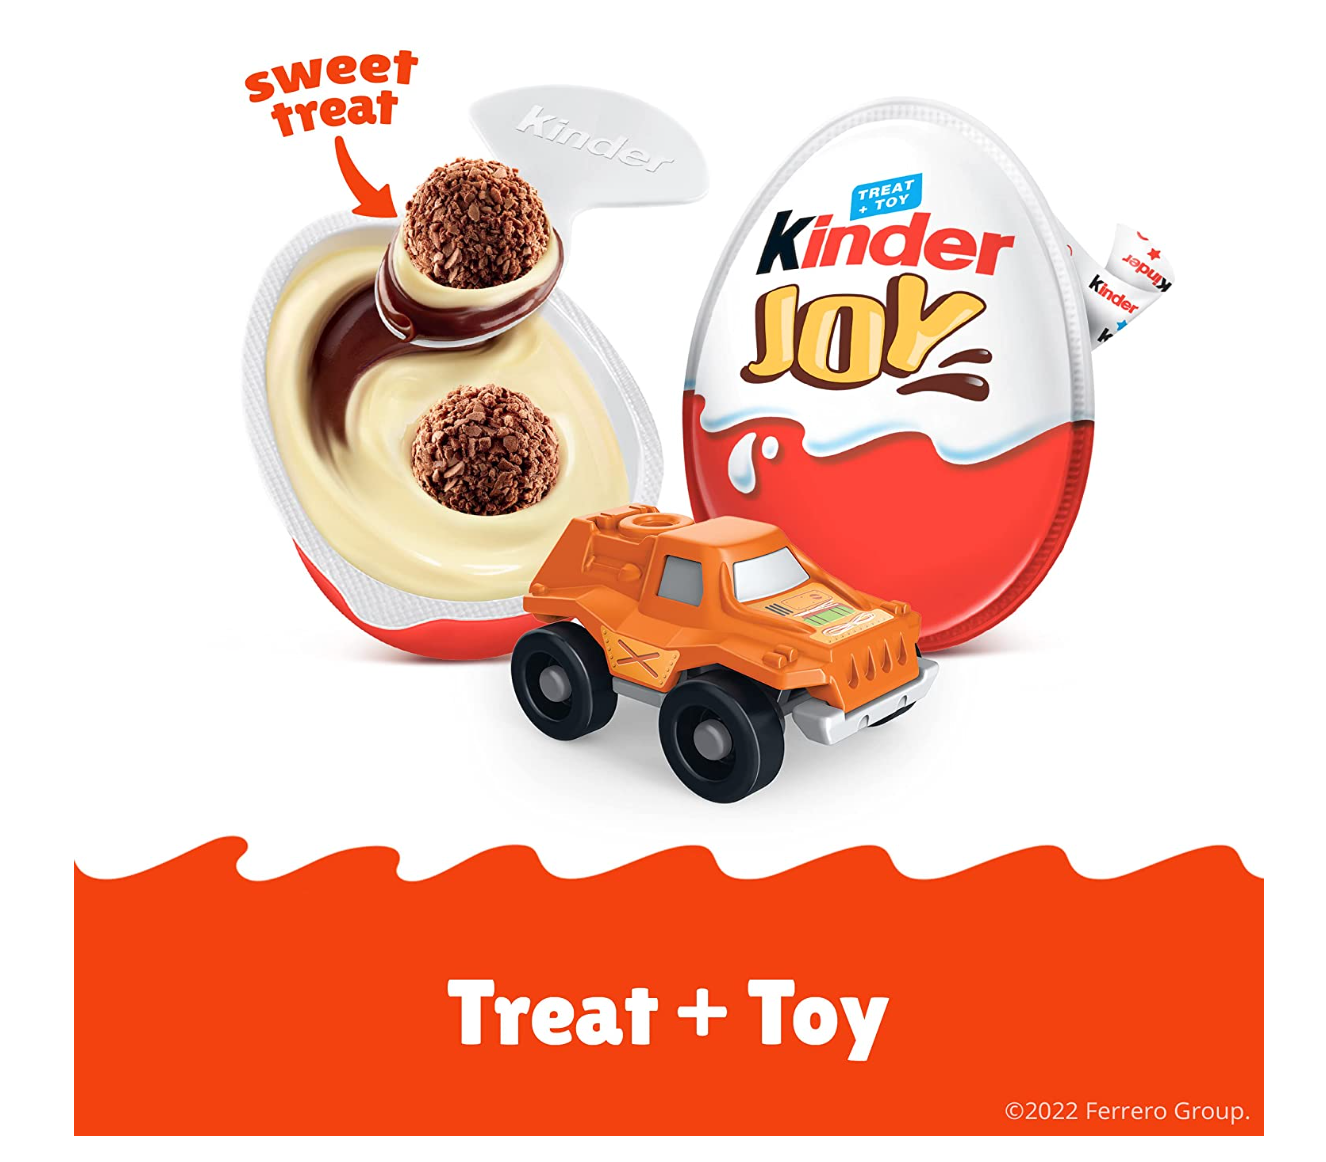 Kinder JOY Chocolate Eggs Classic with Toys for Boys & Girls 60x15g ($1.35/Unit)